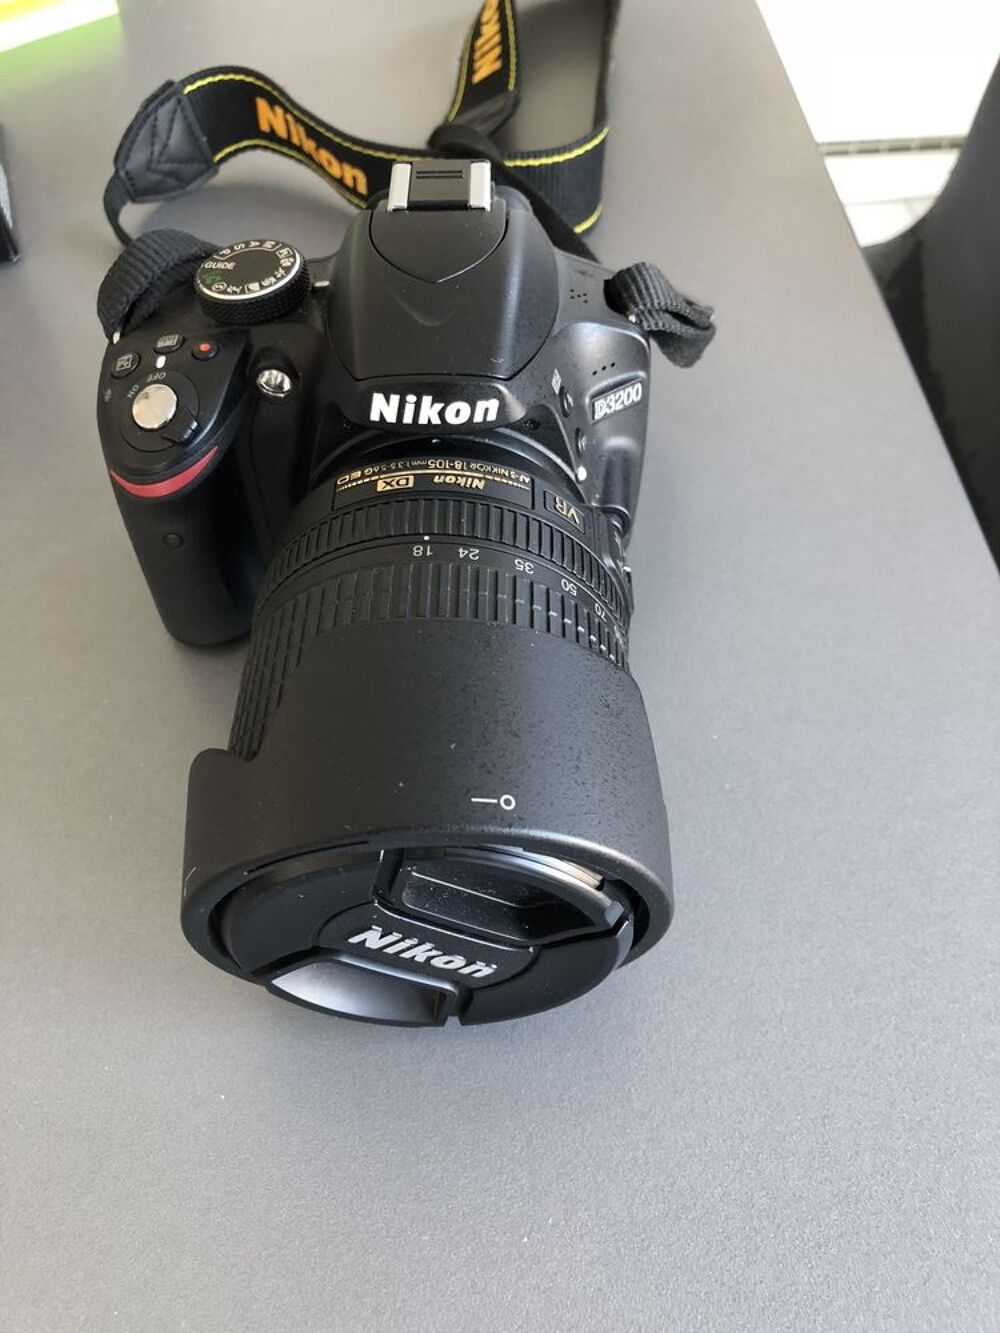 Appareil photo Nikon d3200 + objectif 18-55 mm Photos/Video/TV